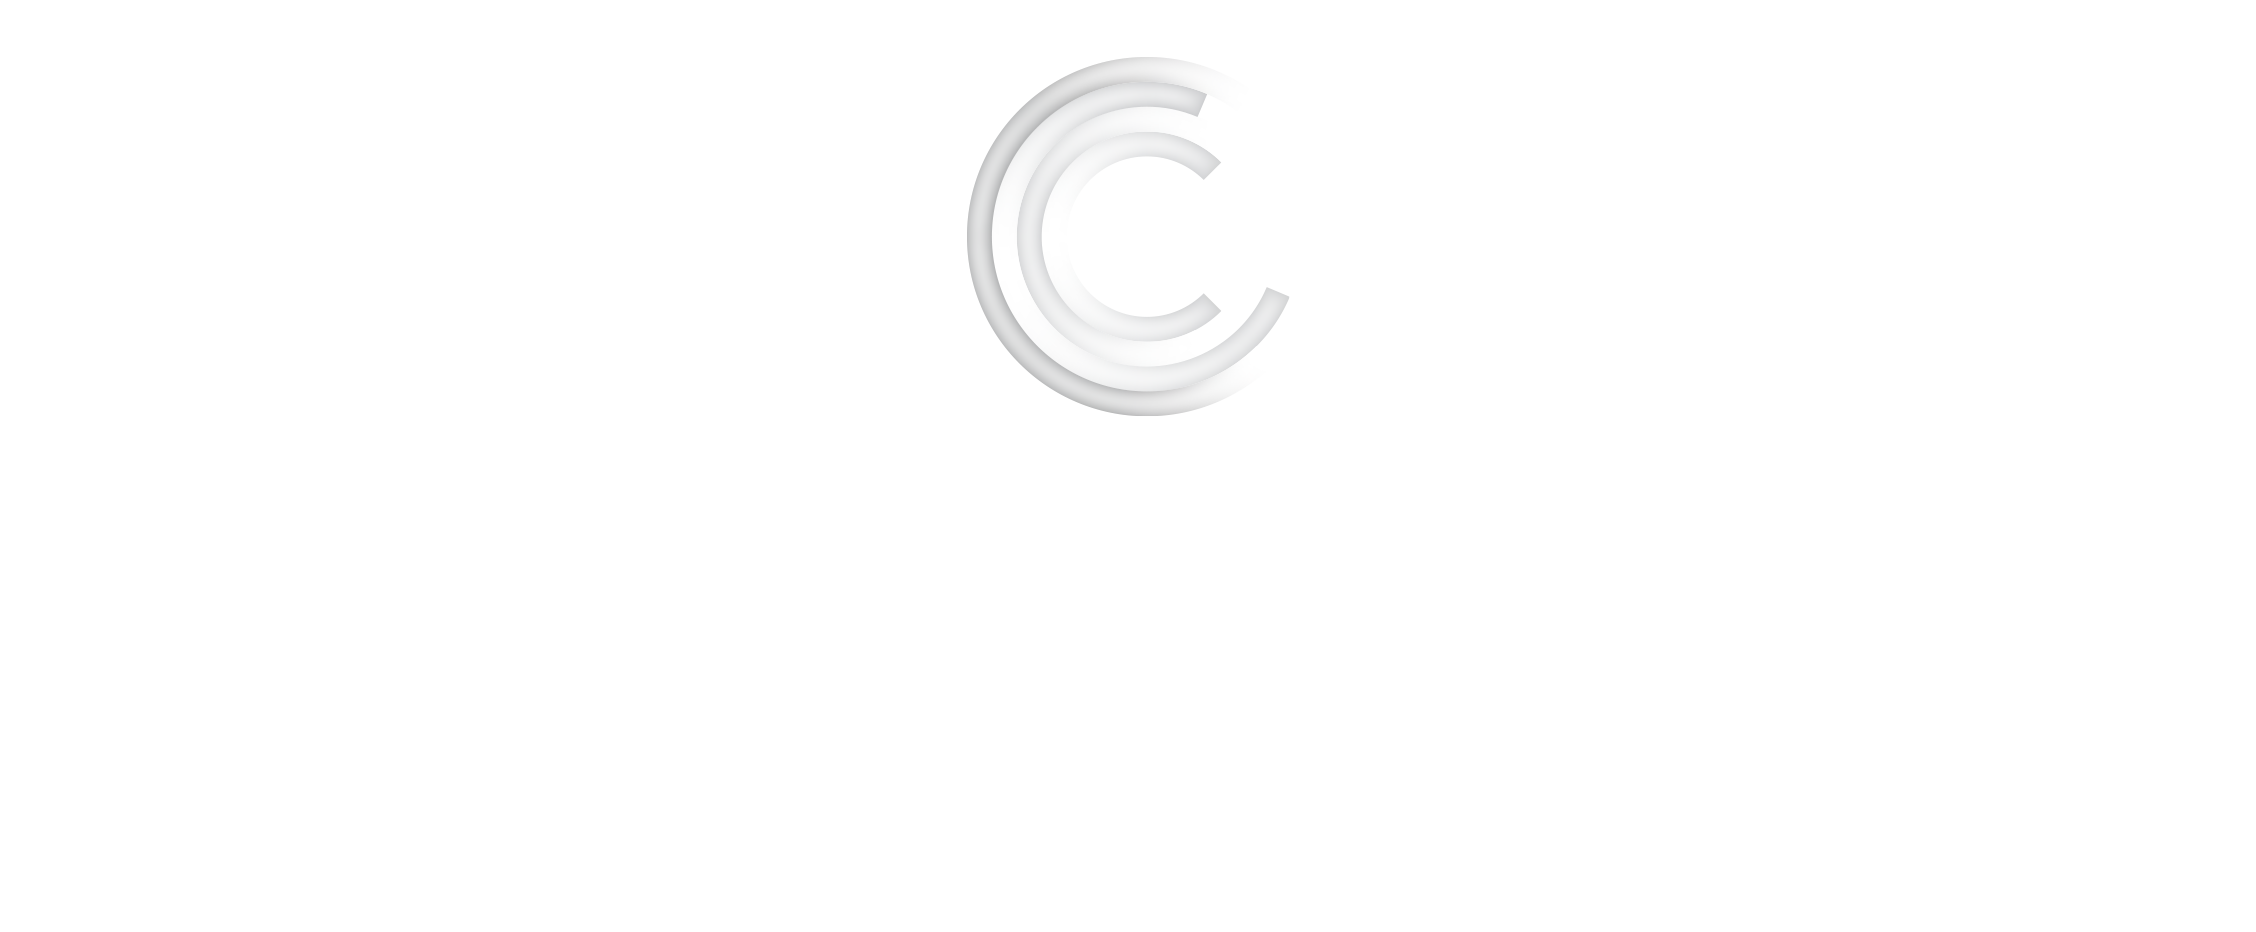 caelum capital limited